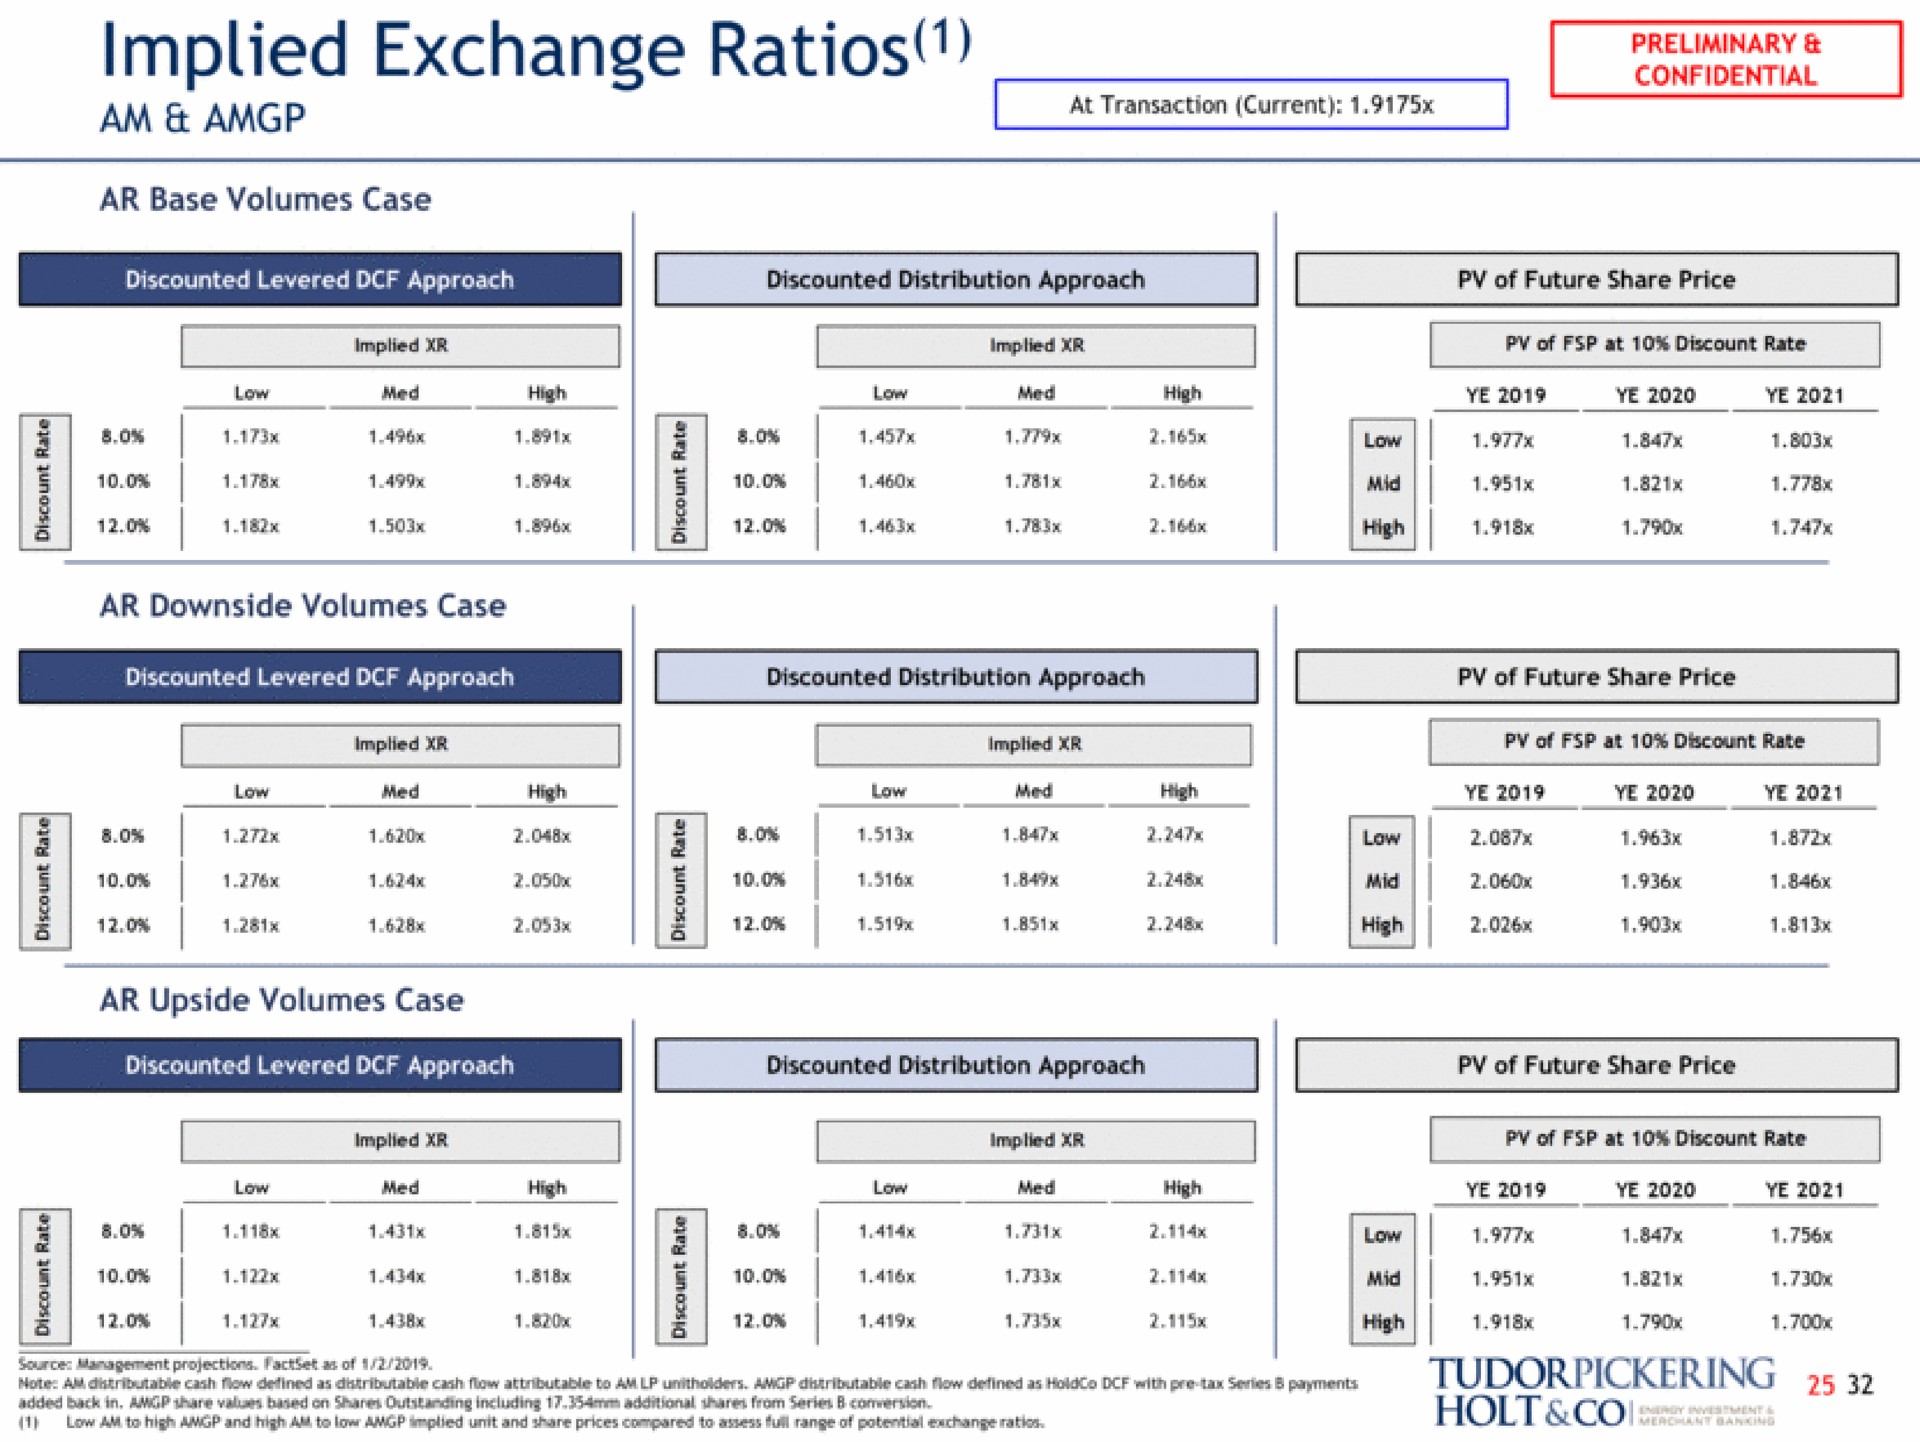 implied exchange ratios am holt | Tudor, Pickering, Holt & Co